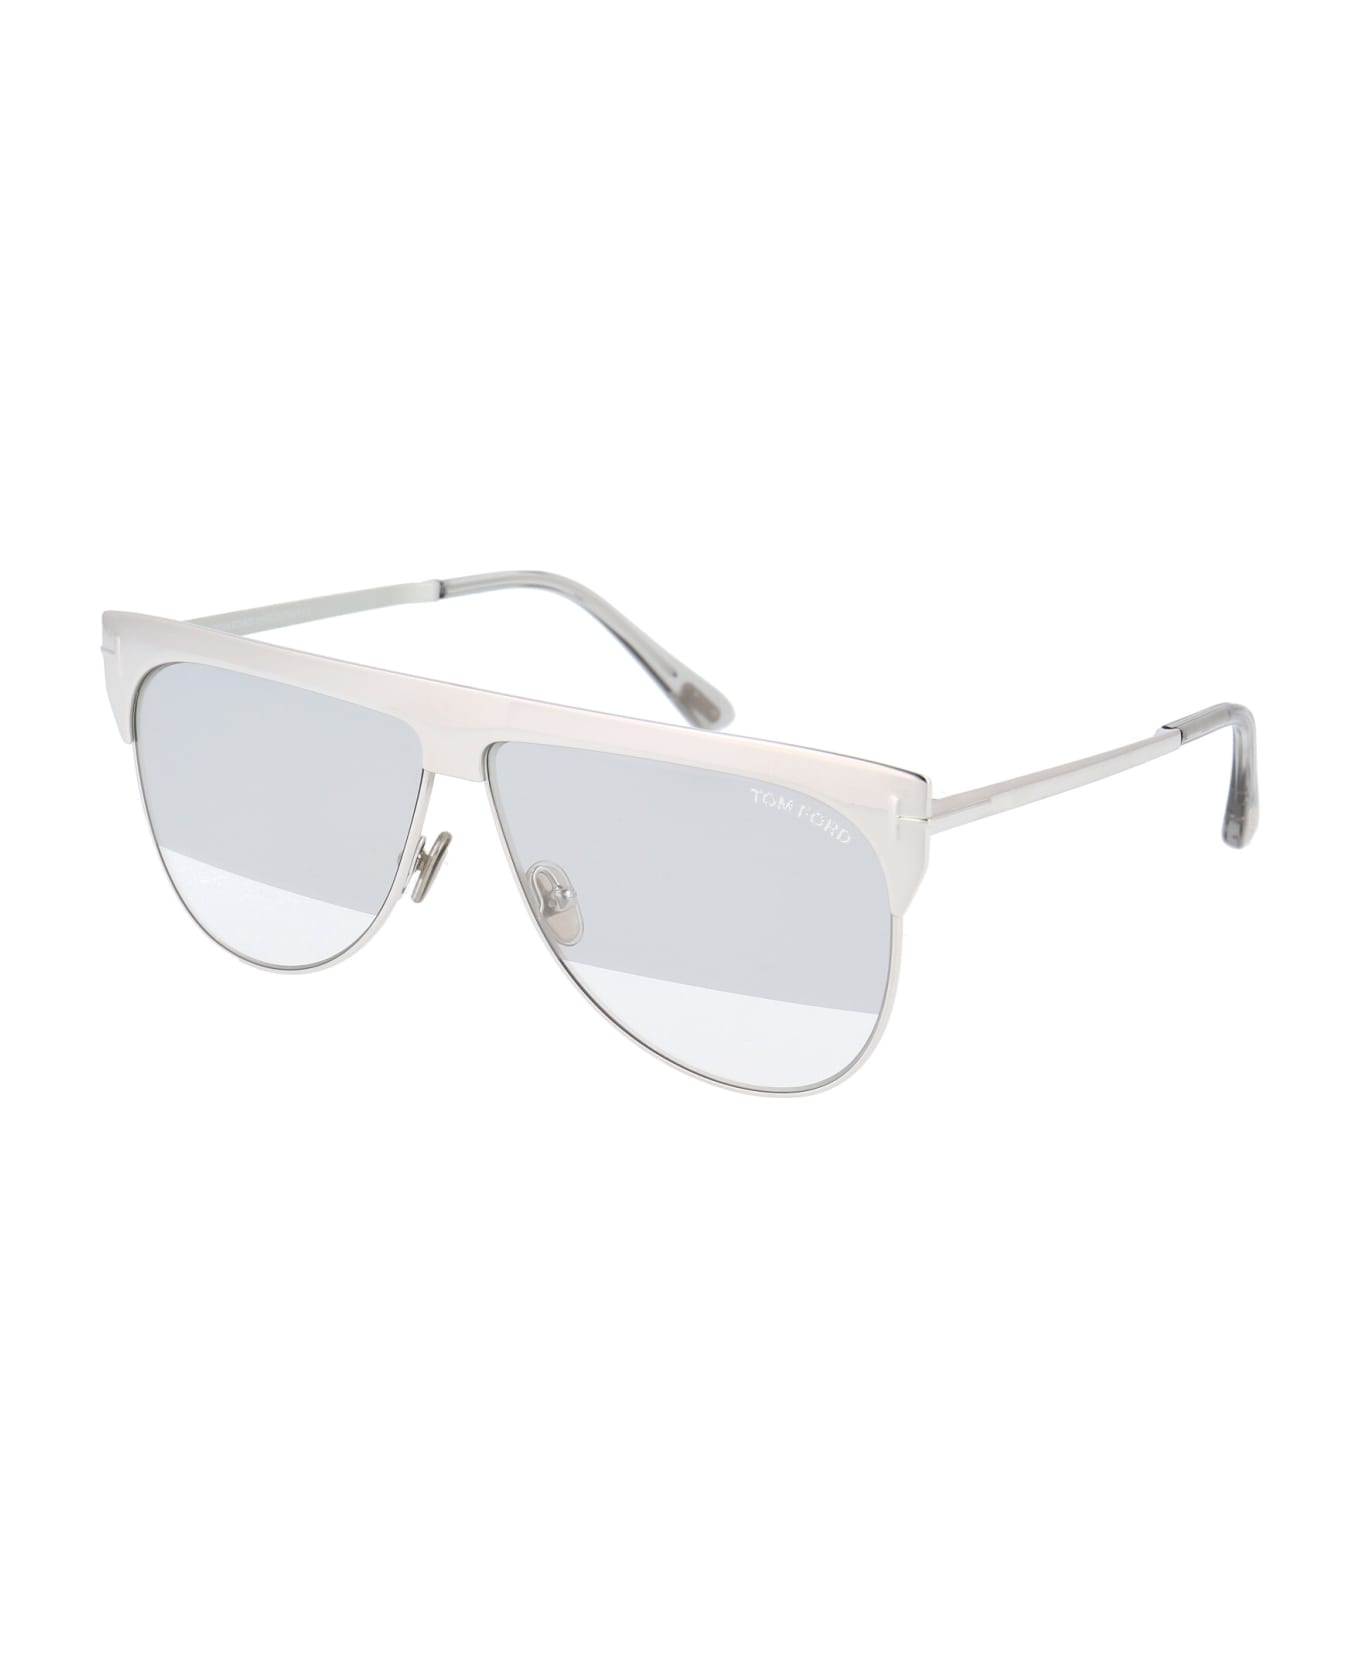 Tom Ford Eyewear Winter Sunglasses - 18C SILVER